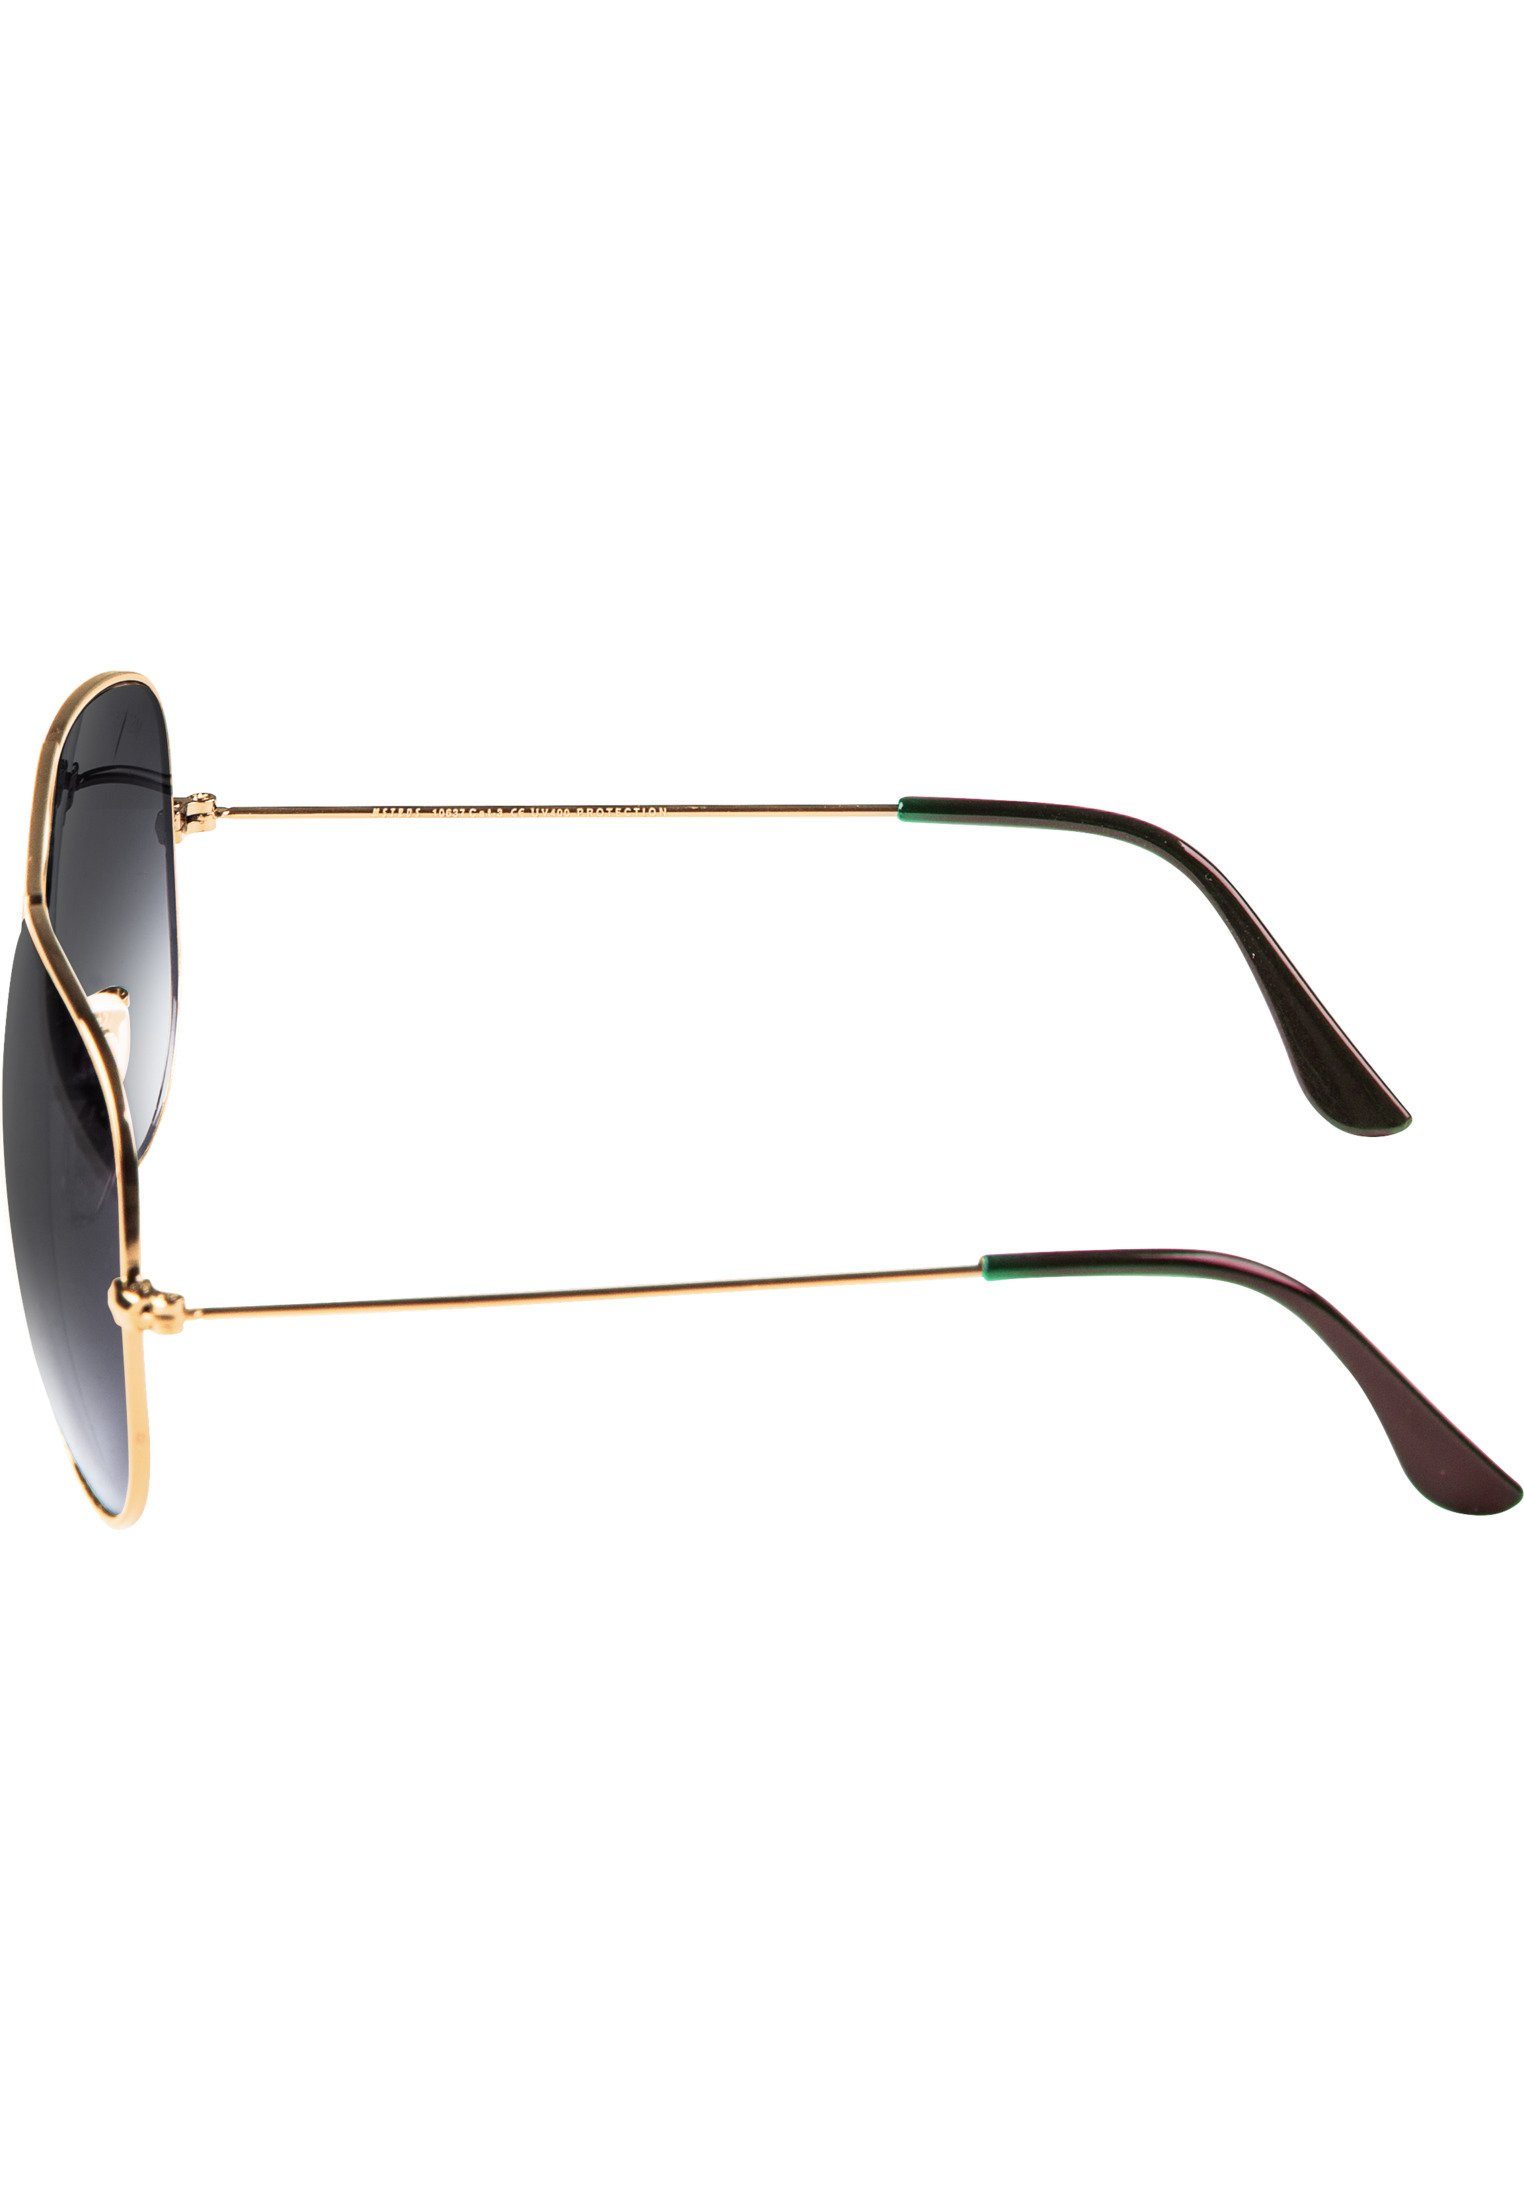 MSTRDS Sonnenbrille Accessoires Sunglasses PureAv gold/grey